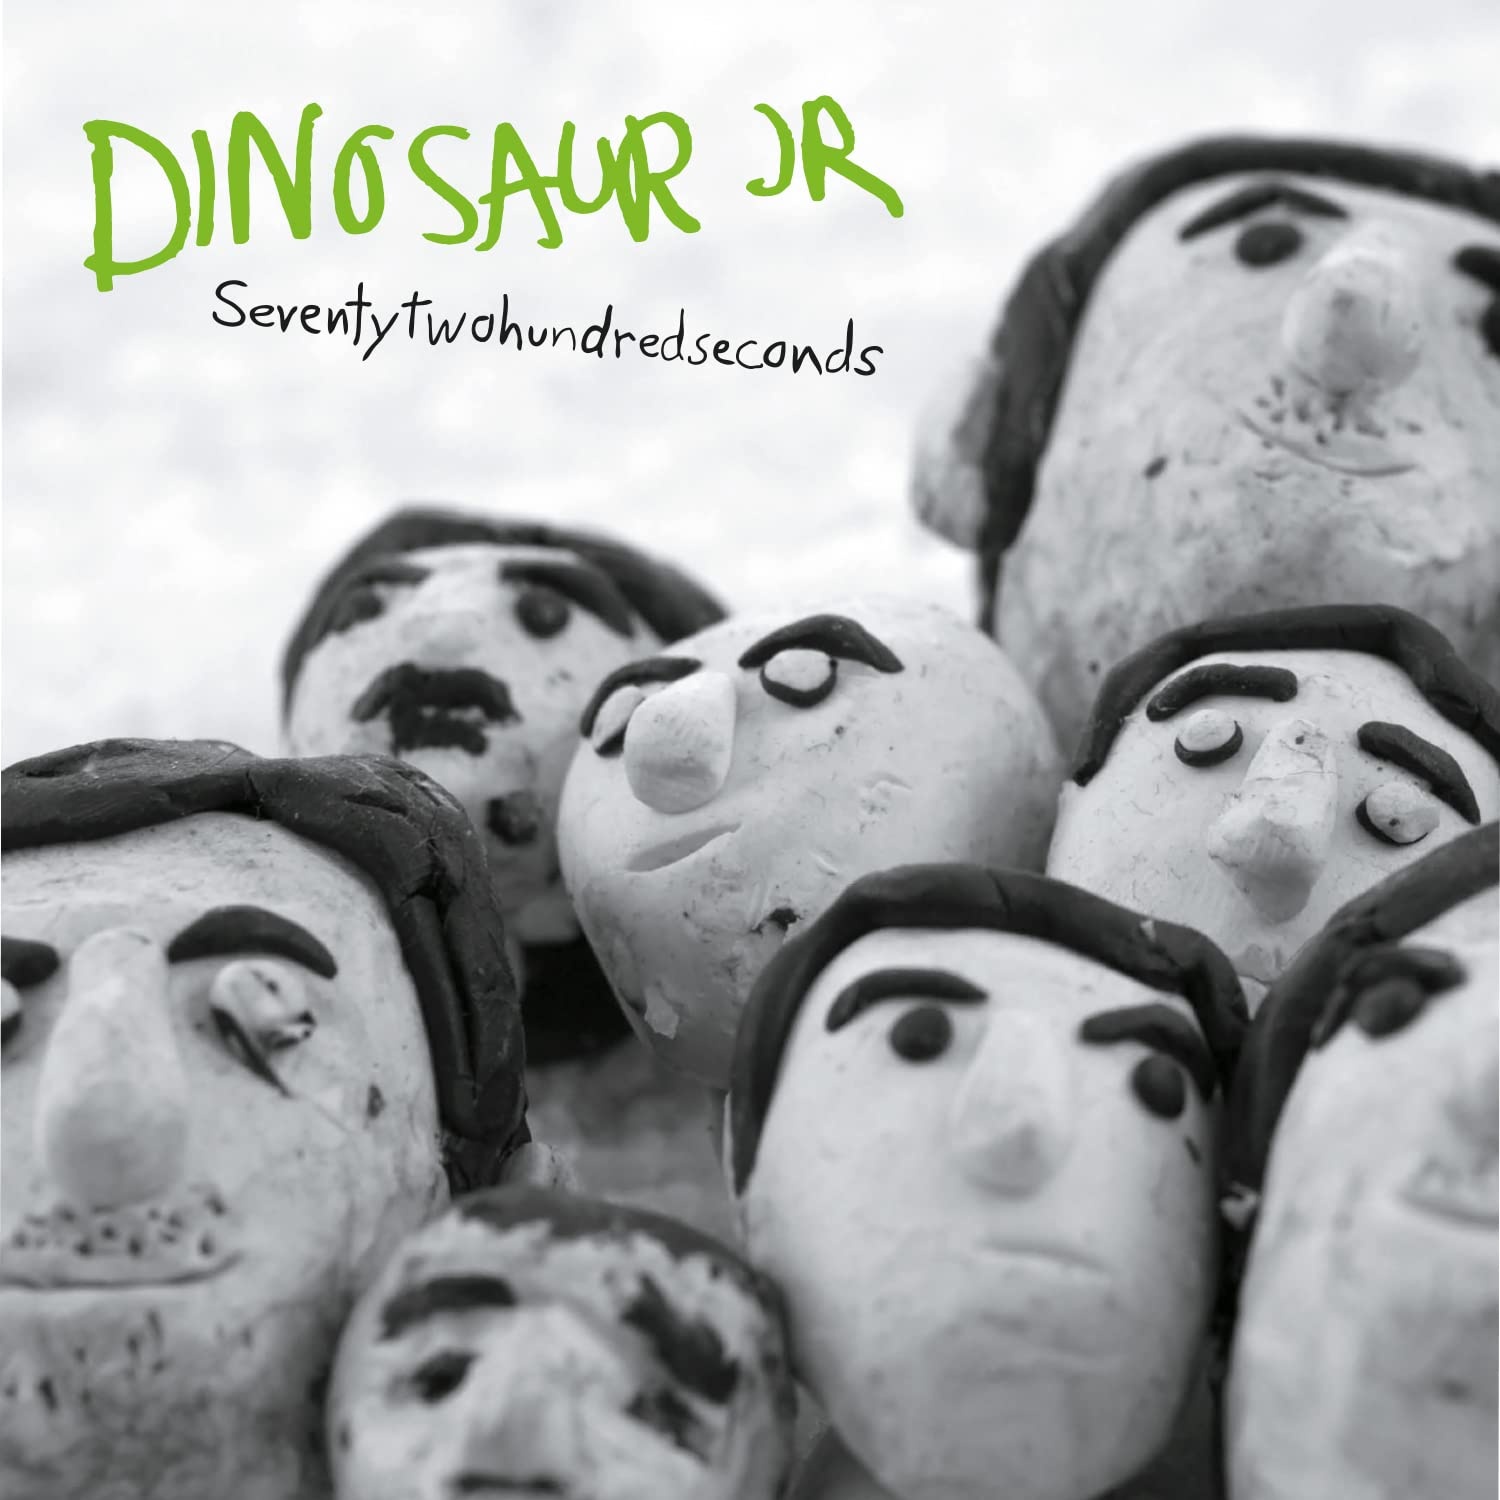 Dinosaur Jr. - Seventytwohundredseconds - MTV Live vinyl cover